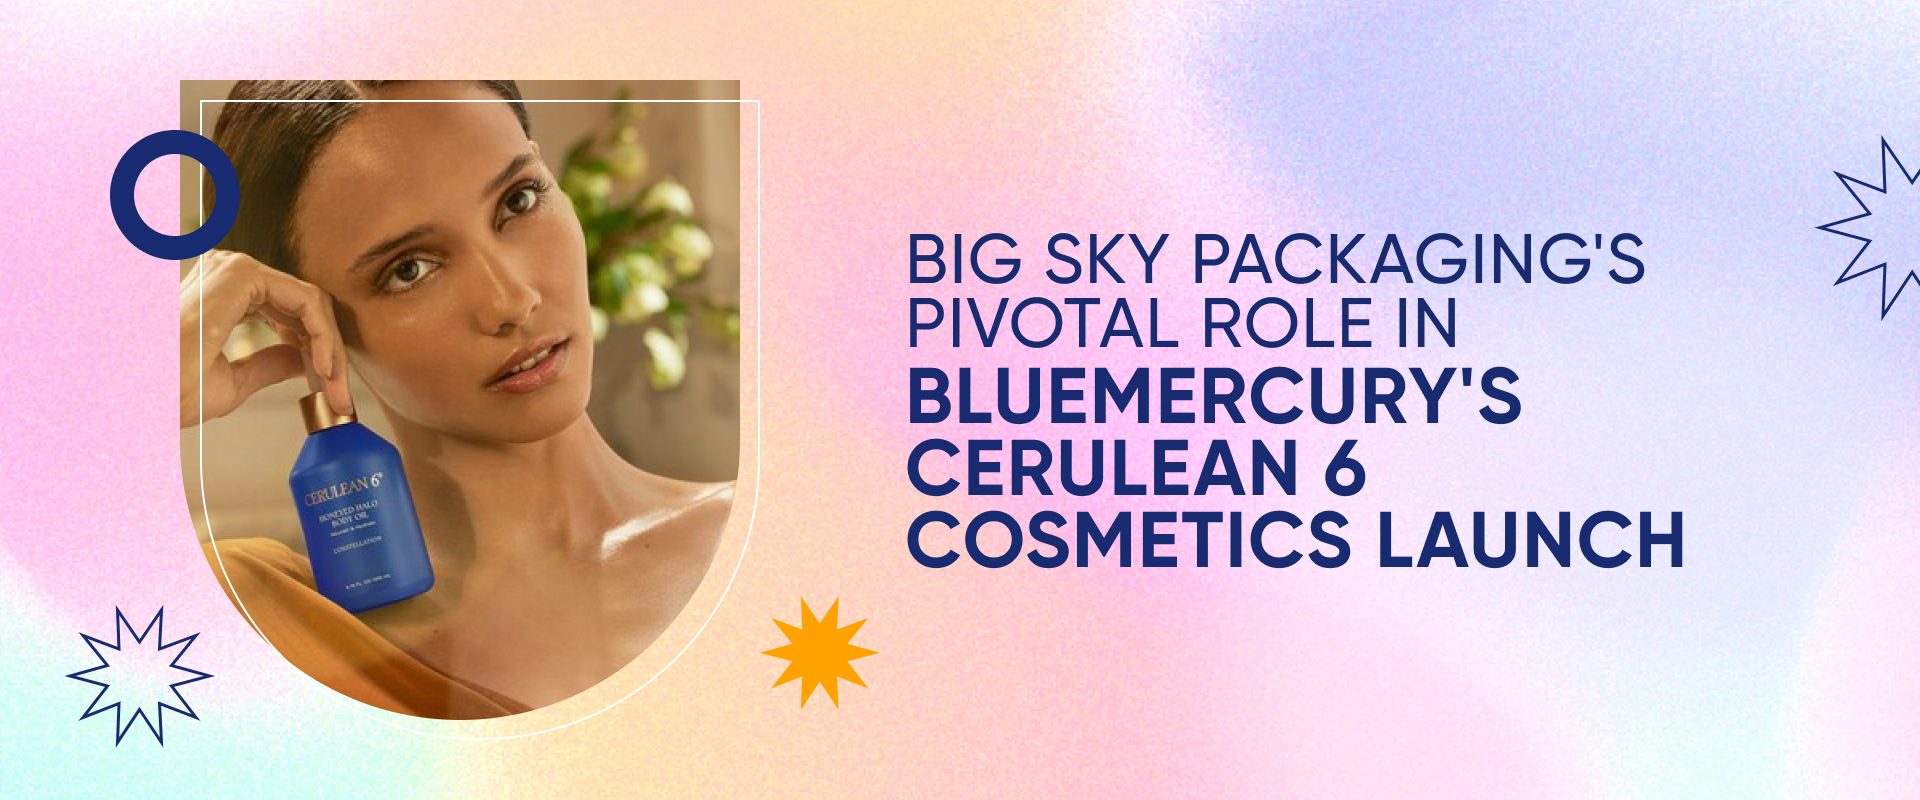 BIG SKY Packagings Pivotal Role in Bluemercurys Cerulean 6 Cosmetics Launch